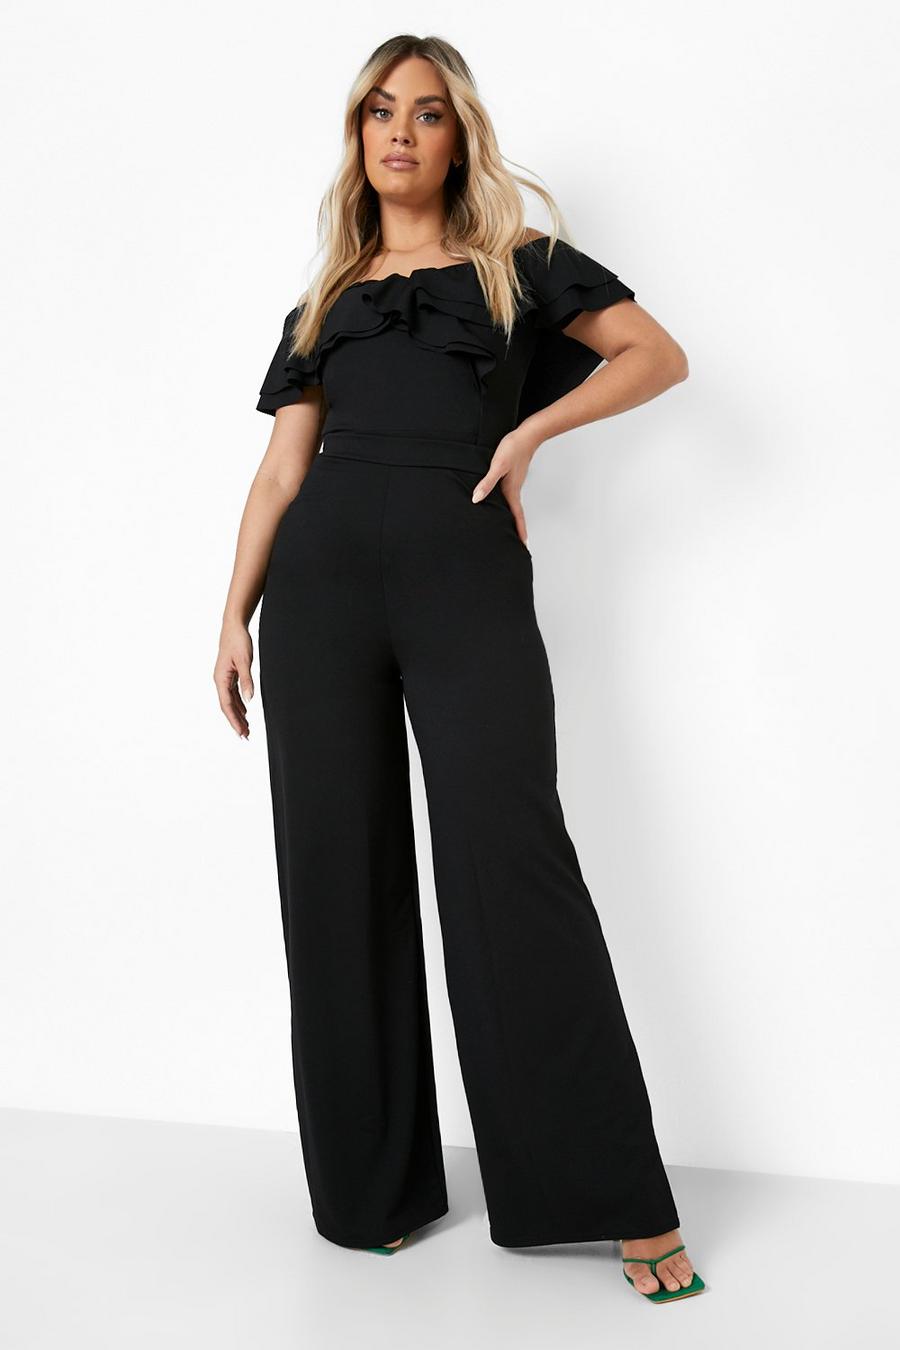 Set coordinato Plus Size -body arricciato & pantaloni, Black nero